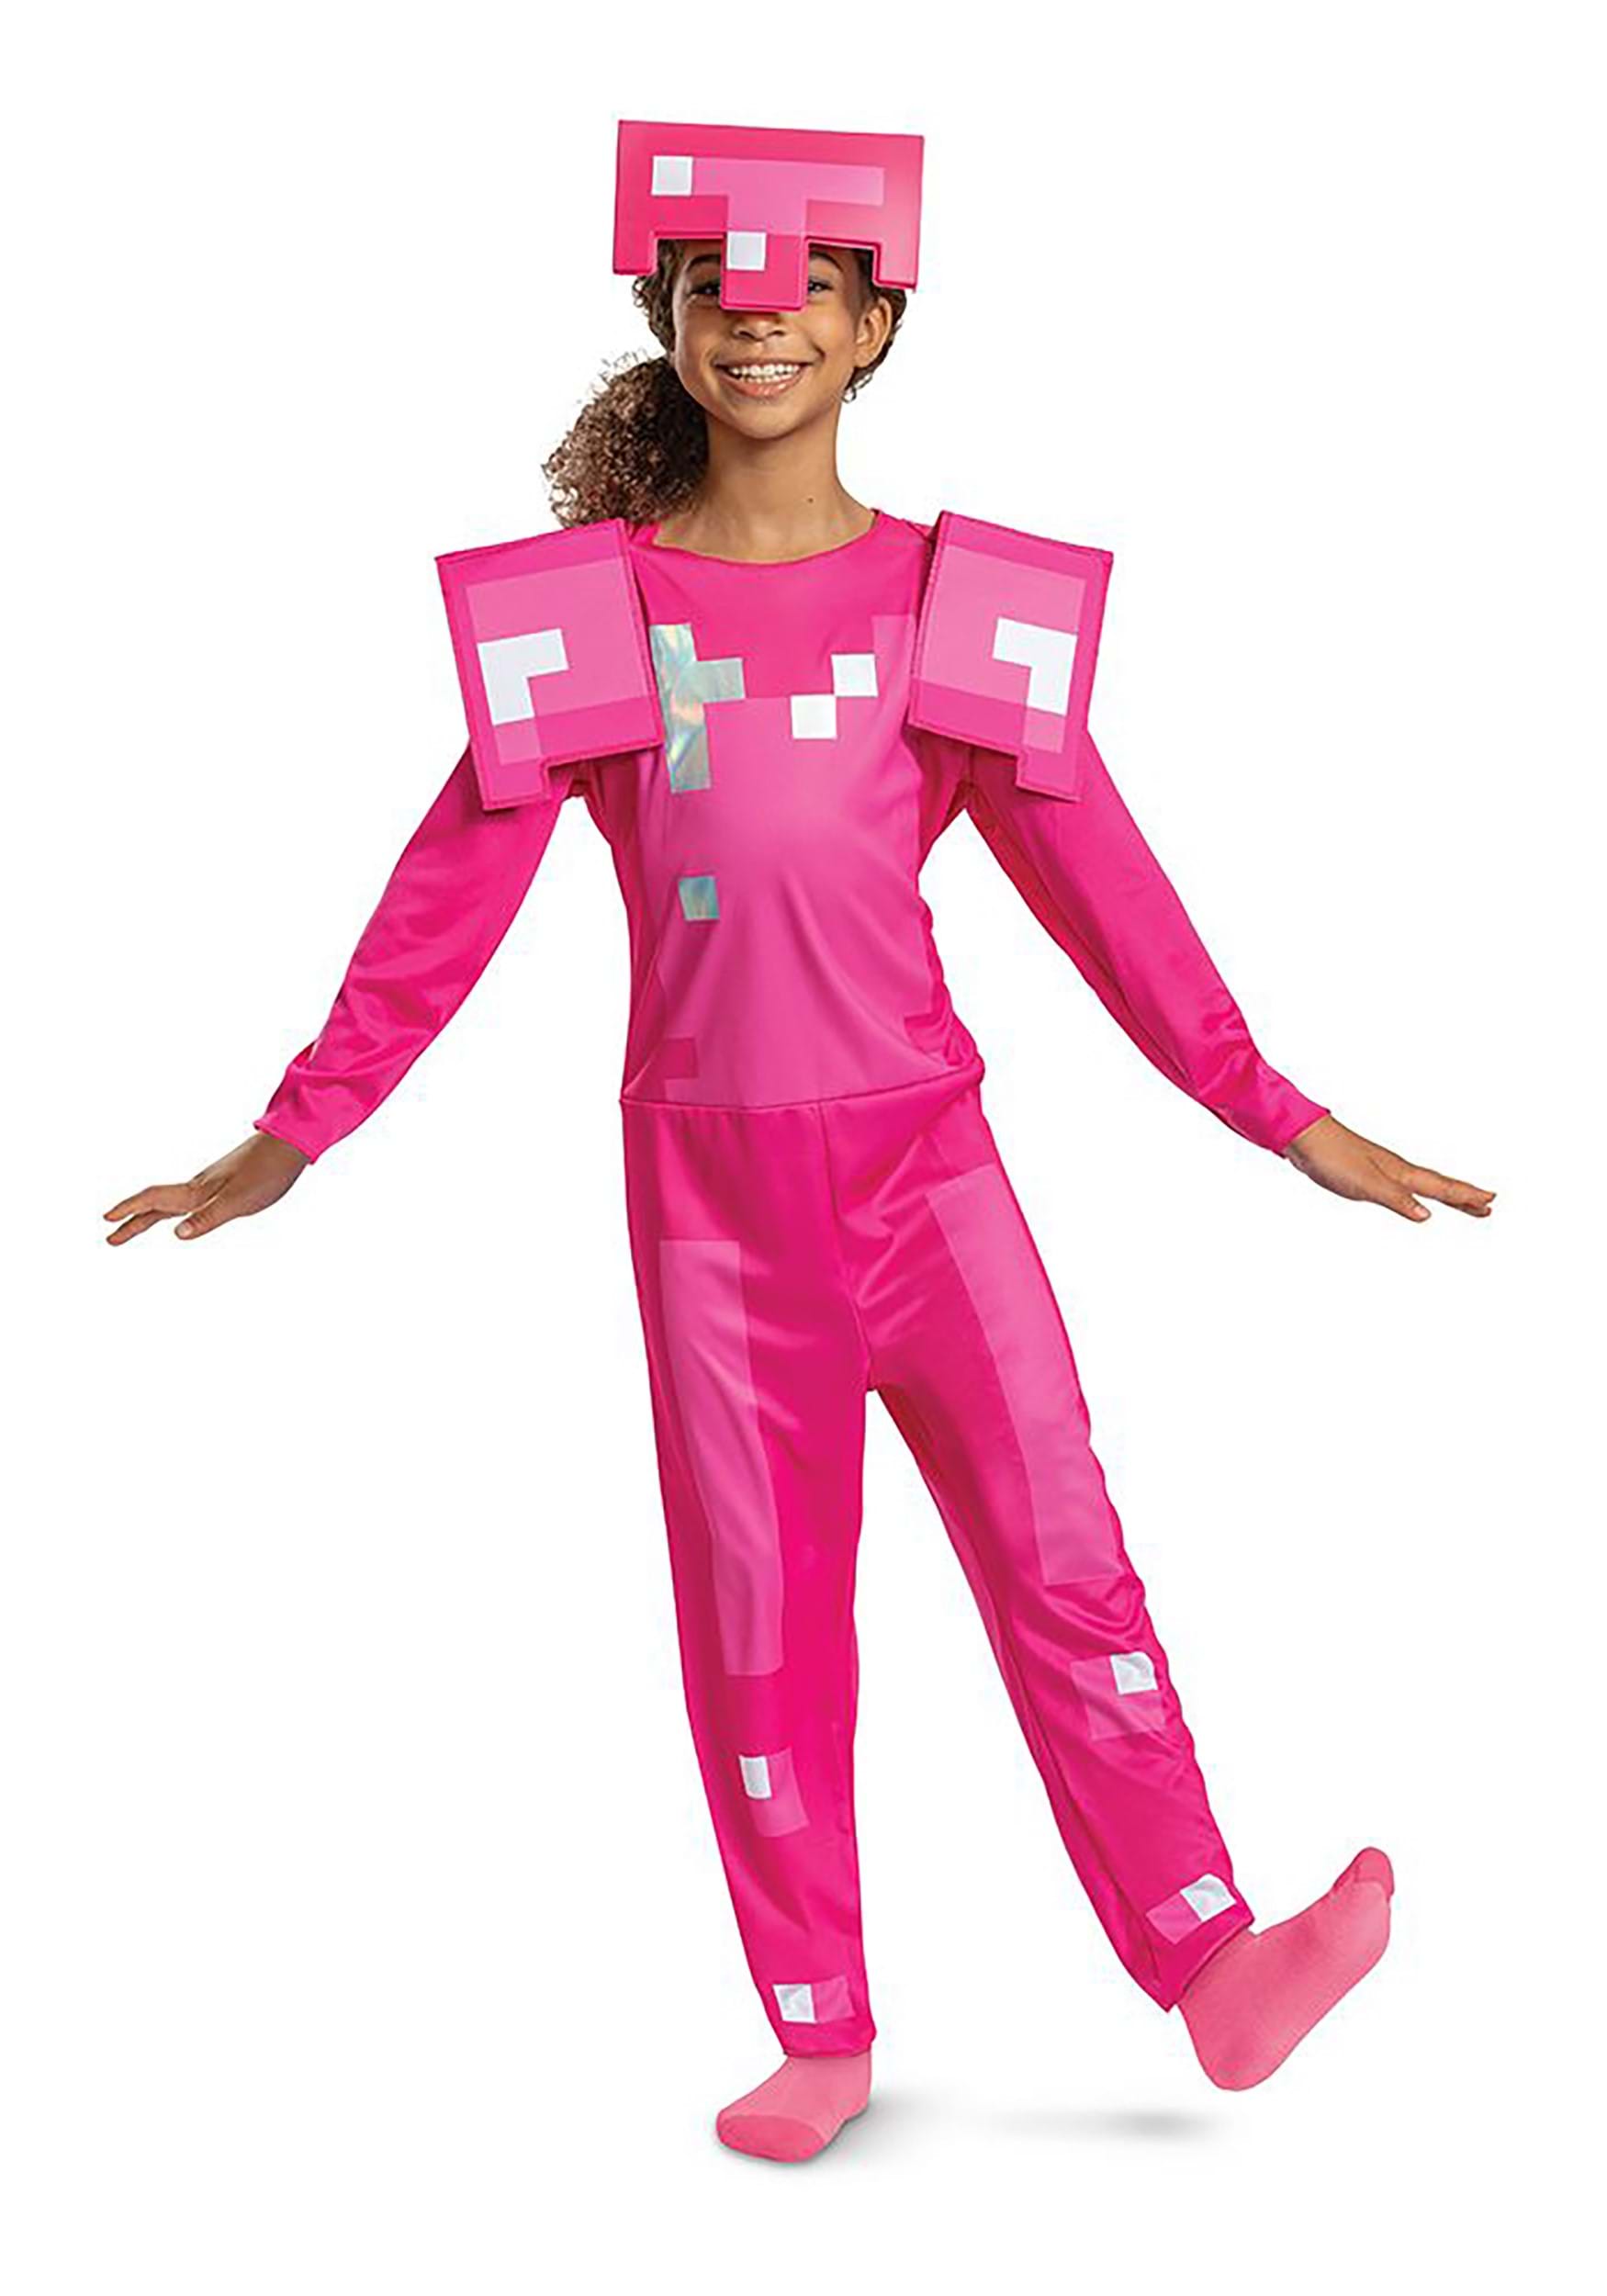 Minecraft Creeper Jumpsuit Classic Halloween Fancy-Dress Costume